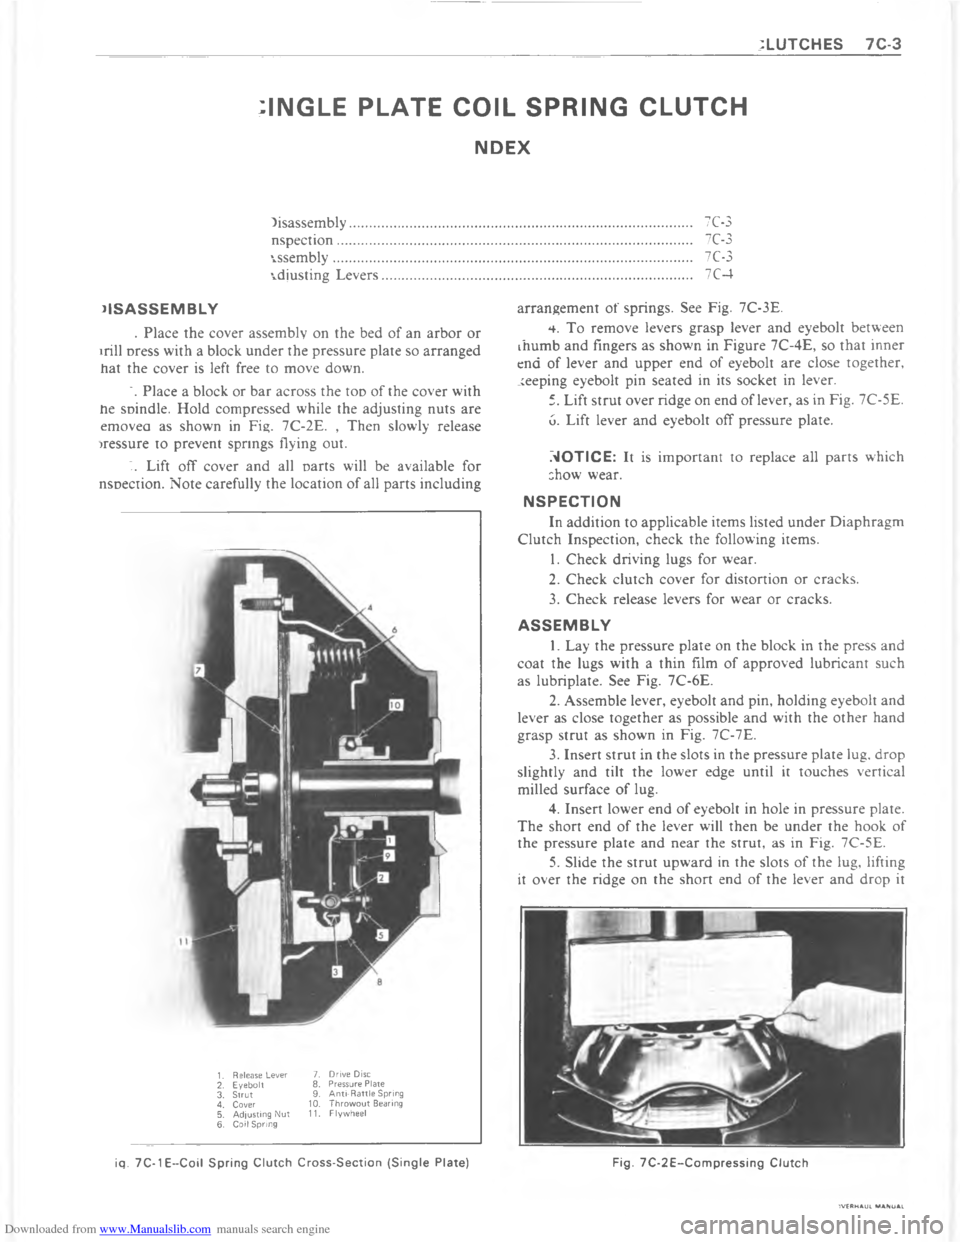 CHEVROLET MALIBU 1980 4.G Workshop Manual Downloaded from www.Manualslib.com manuals search engine    	      A   	   	

$999
\(%999
99
9999


,
6#
C
6
/
.
 
$9
9A
999
9A
999
9A
999
9A

?
6